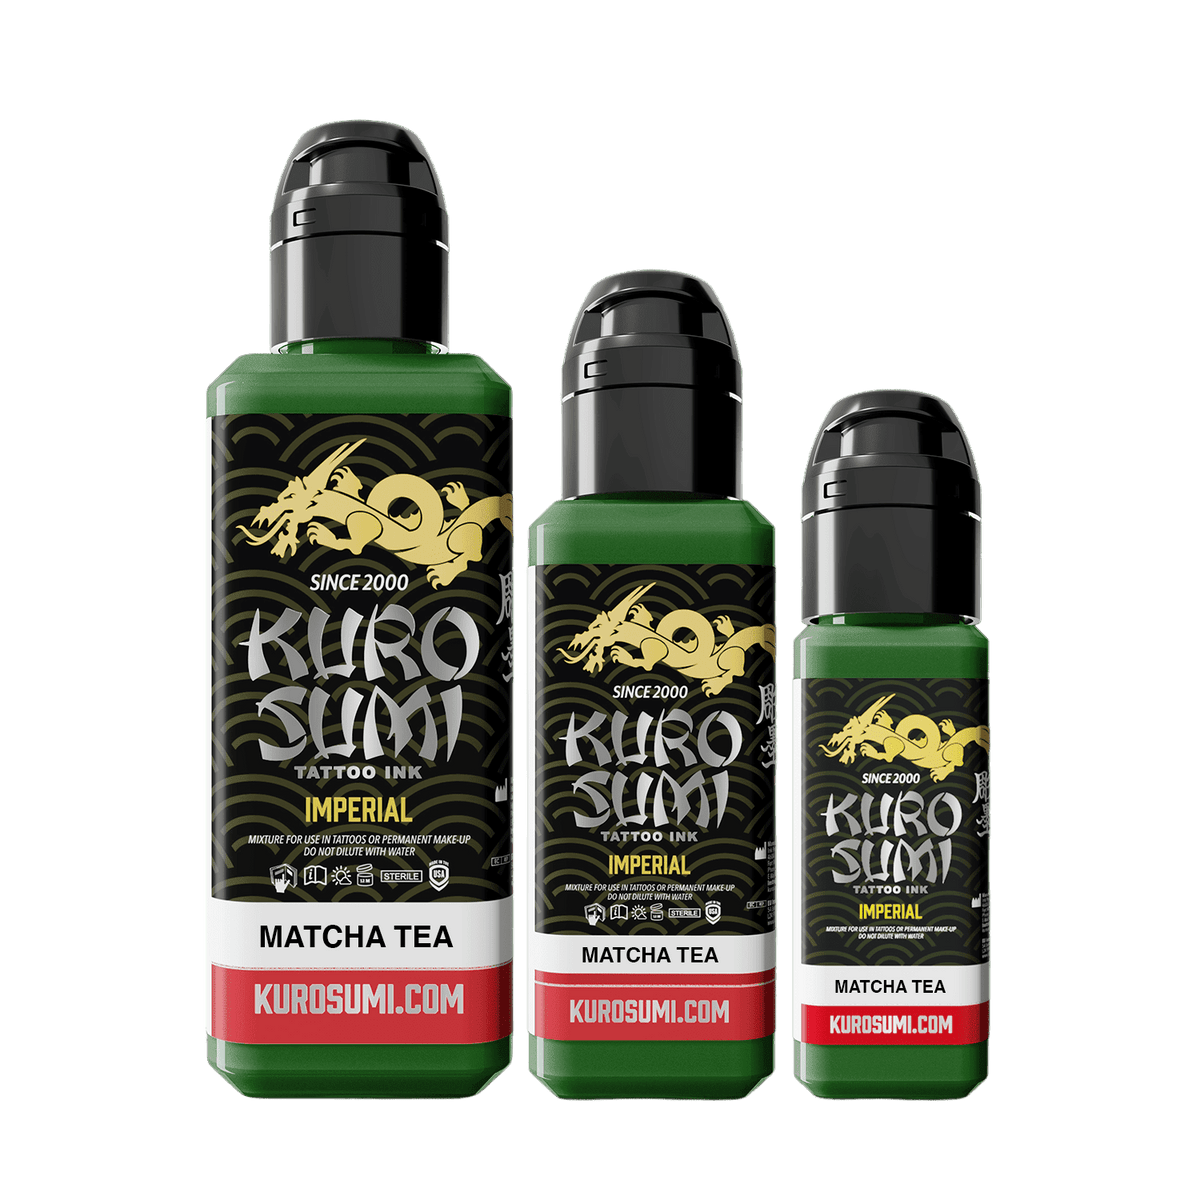 Kuro Sumi Imperial Tattoo Ink Matcha Tea